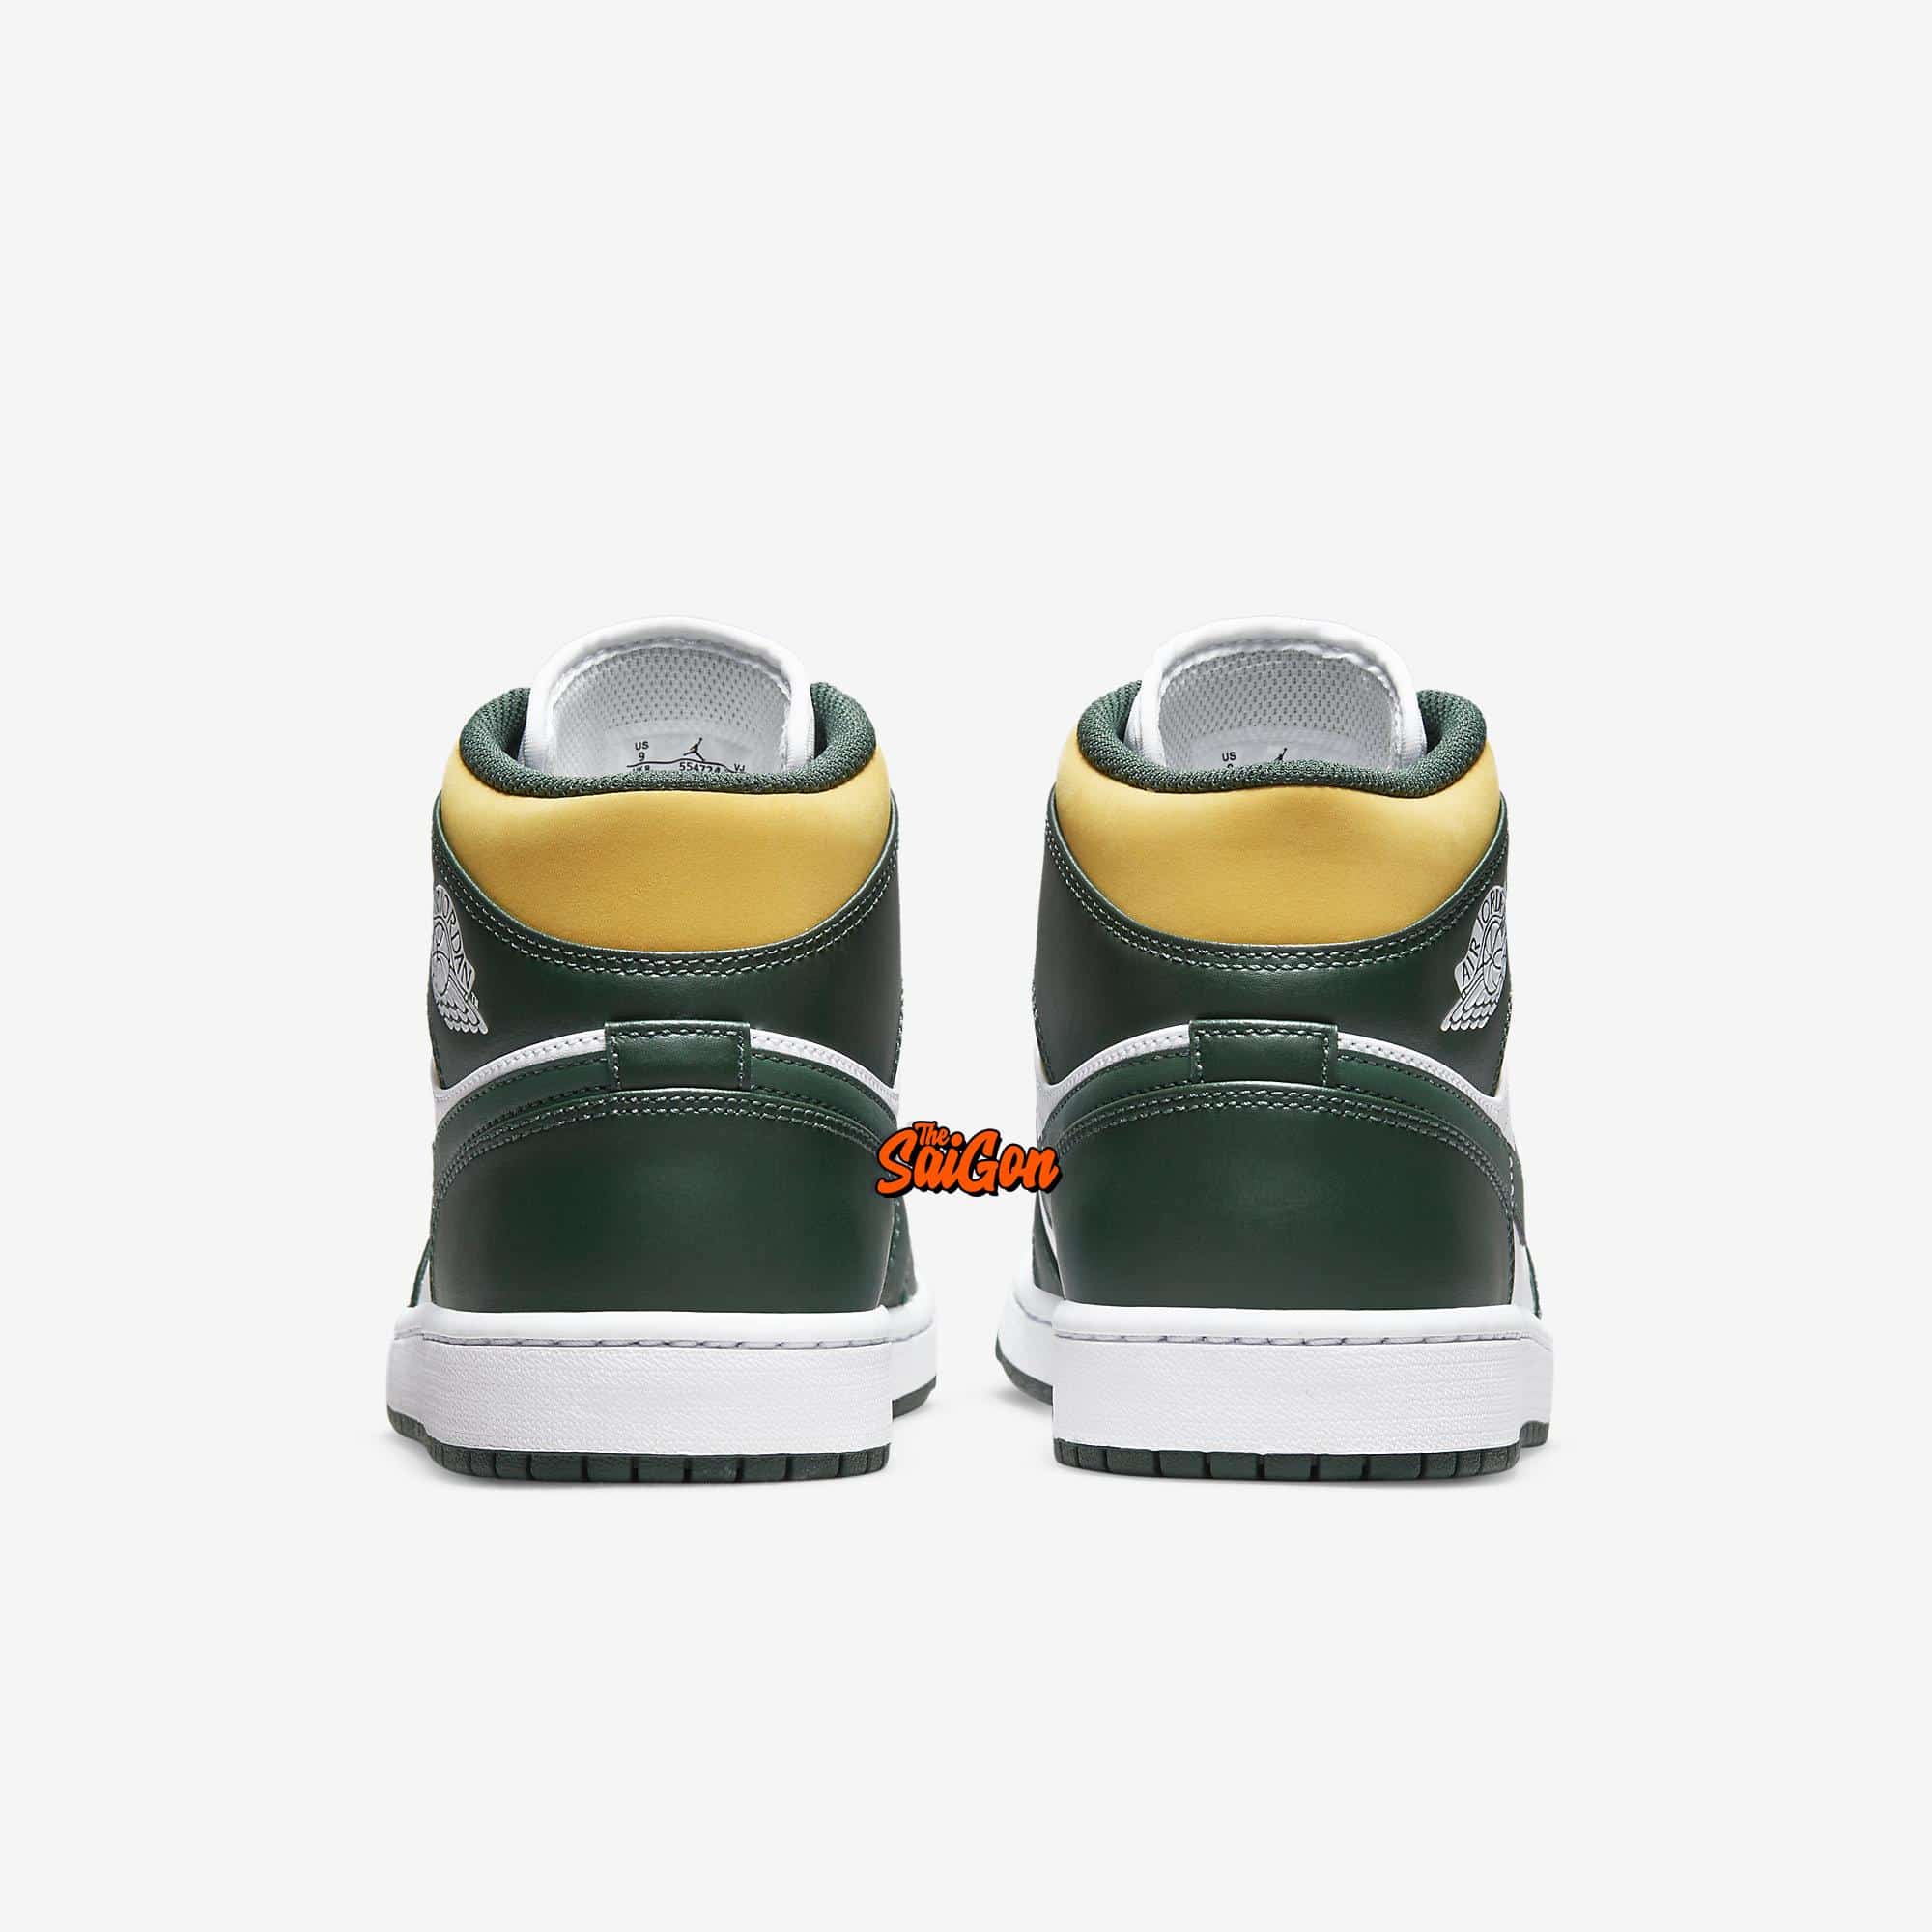 Air Jordan 8 Olive Green Shoes